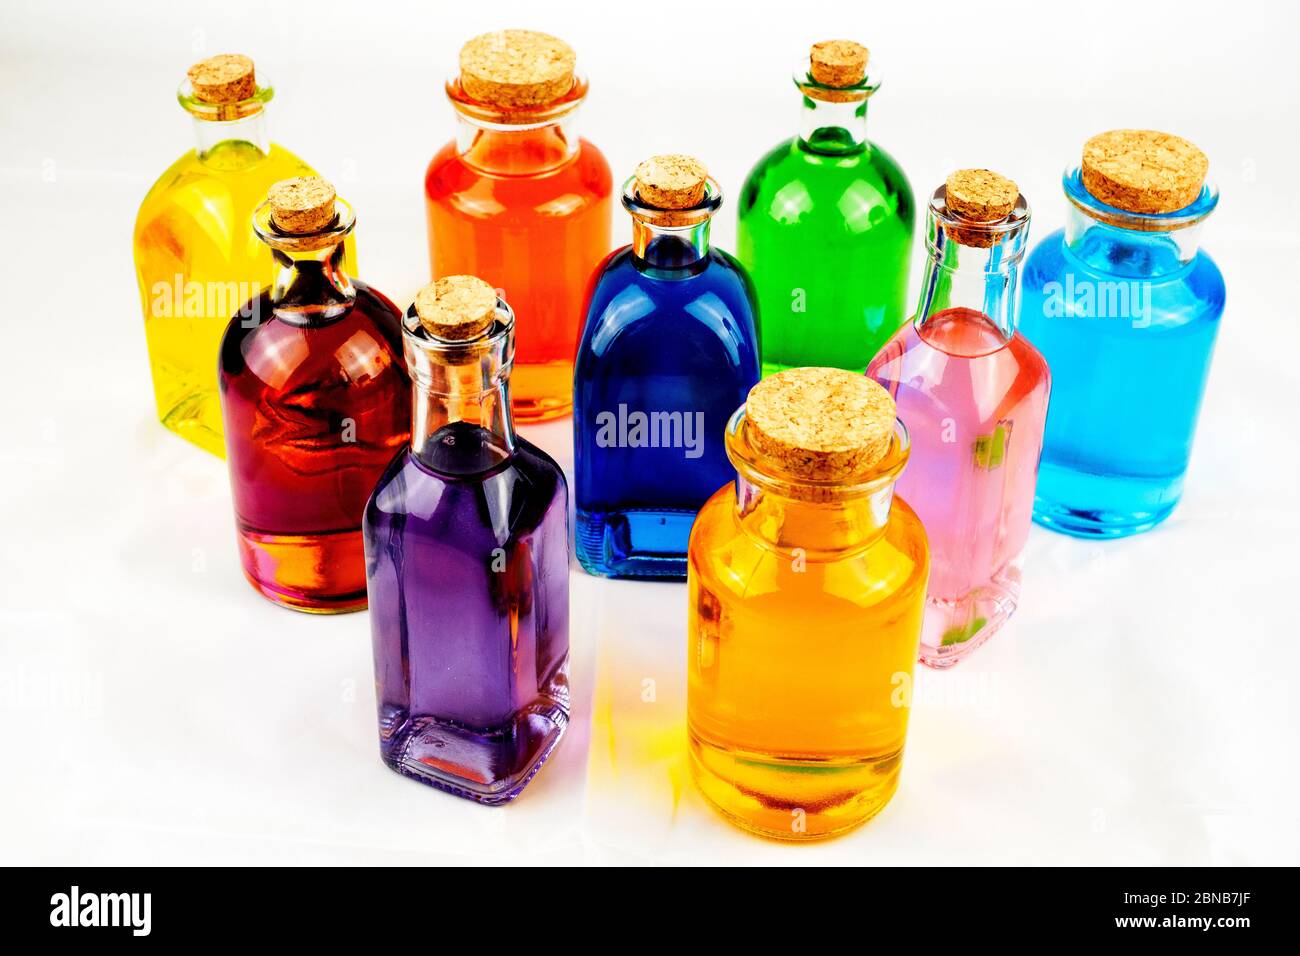 Coloured bottles in white background Stock Photo